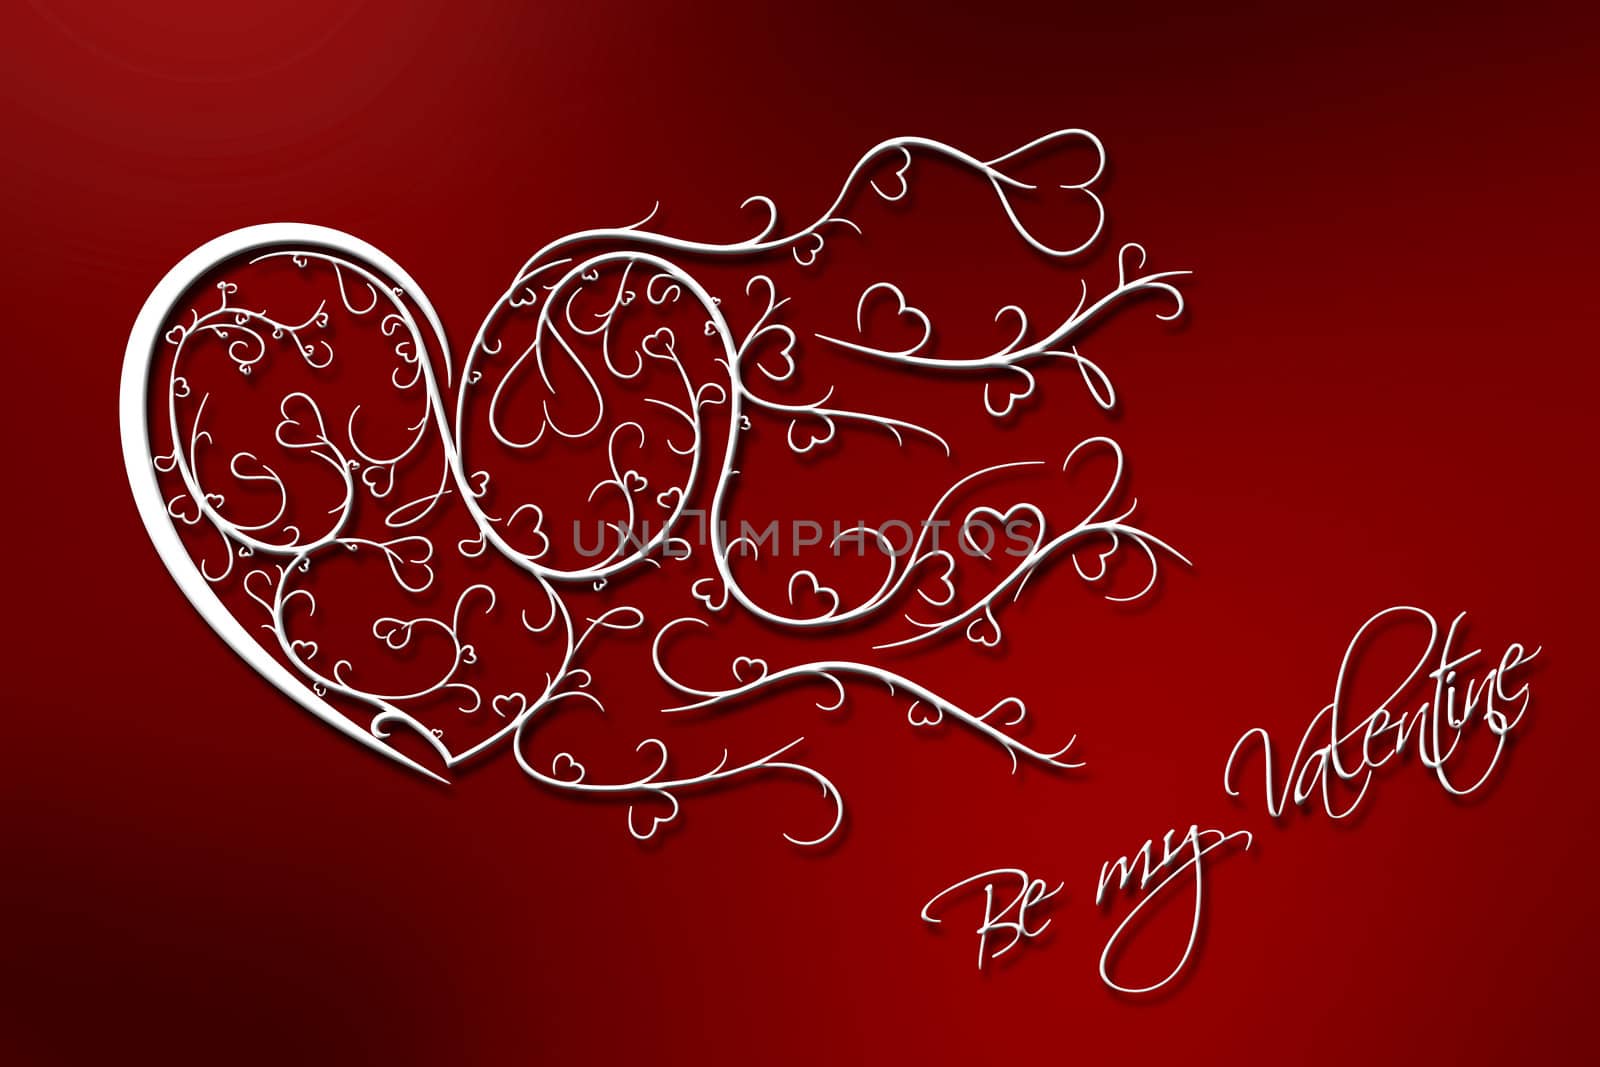 Be my valentine by miso77